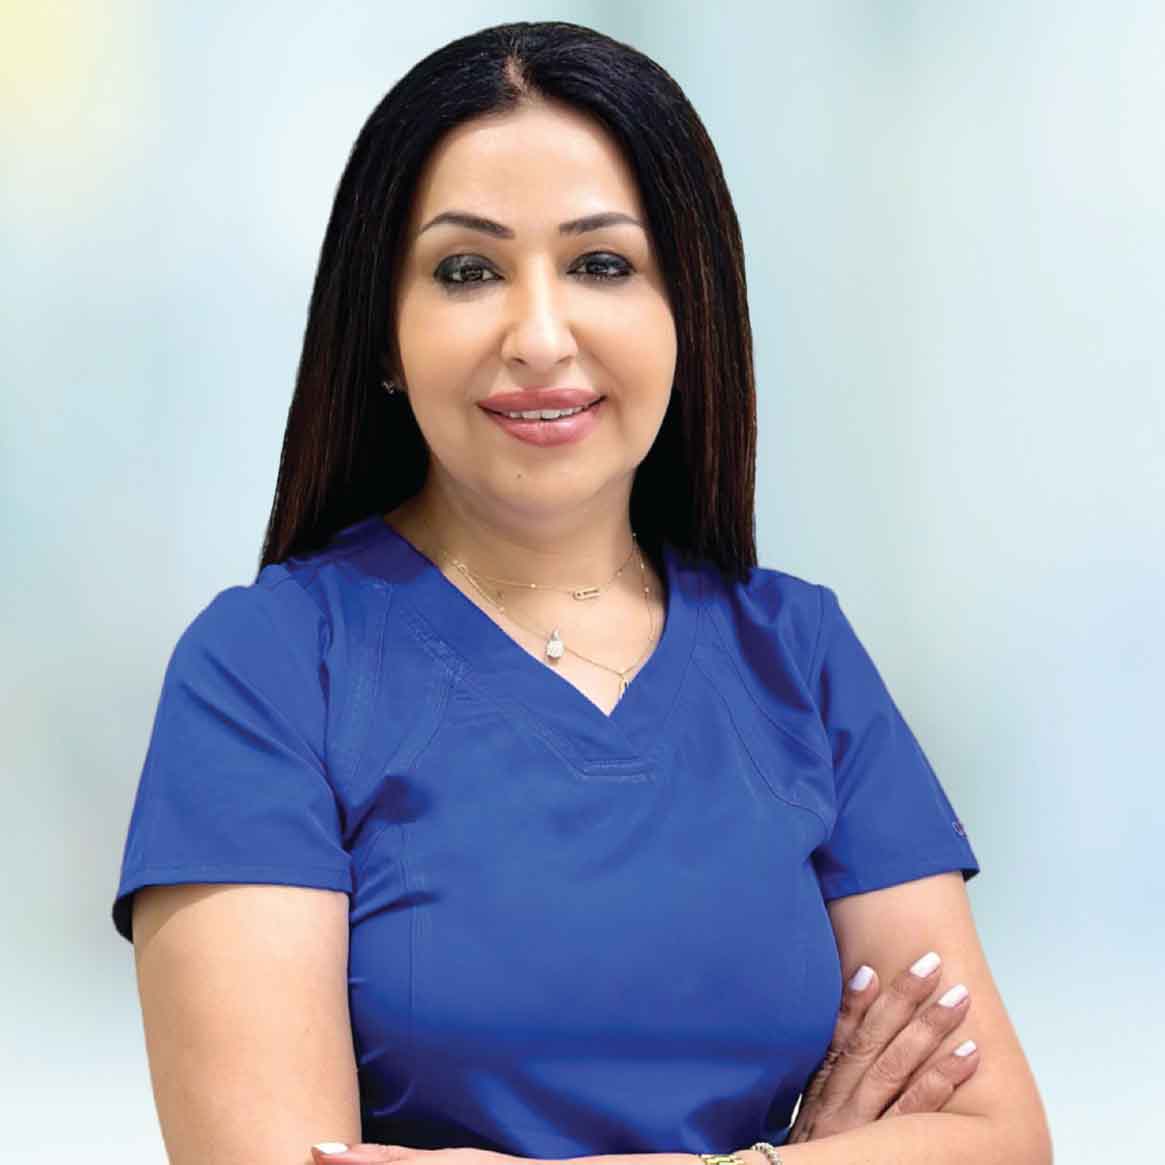 Dr. Hala Alsayed's picture